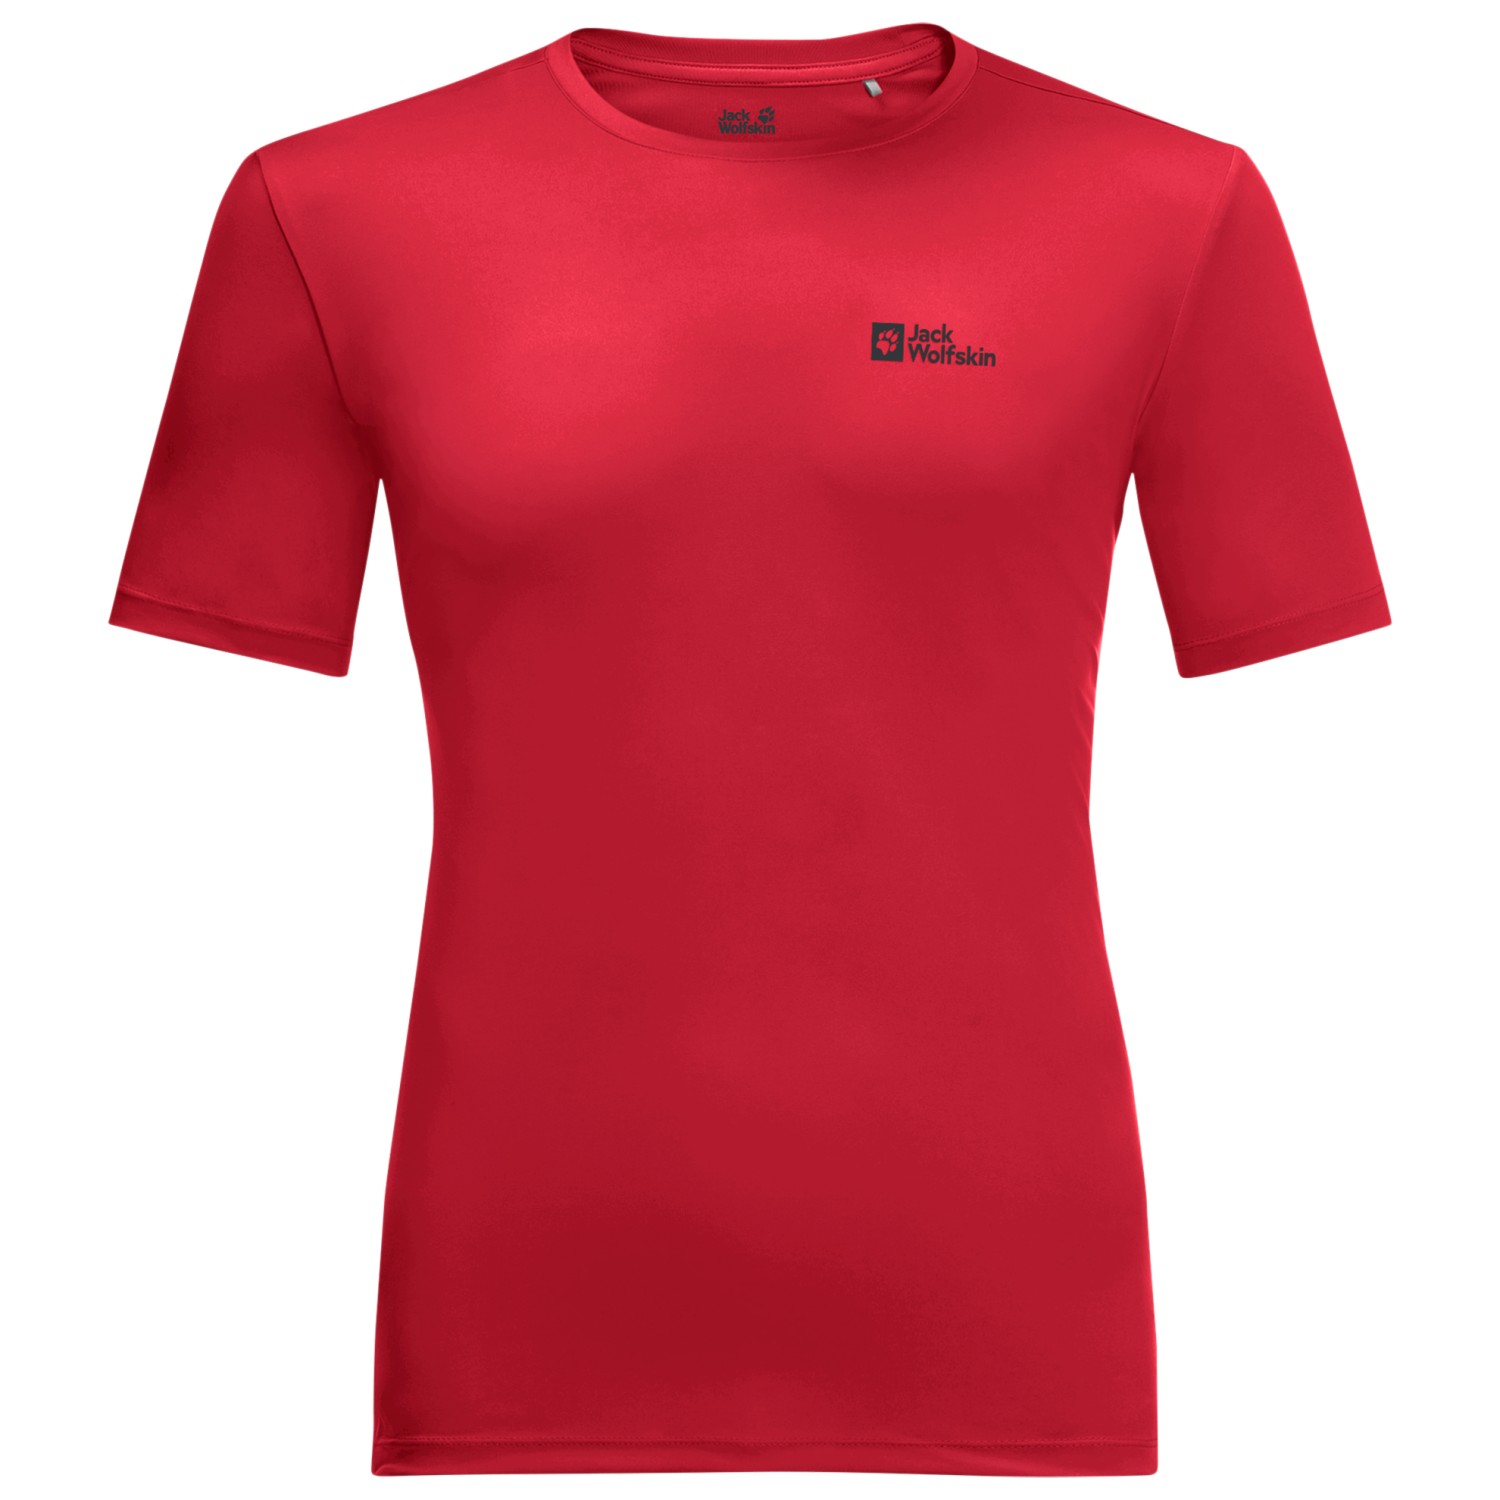 Функциональная рубашка Jack Wolfskin Tech Tee, цвет Red Glow